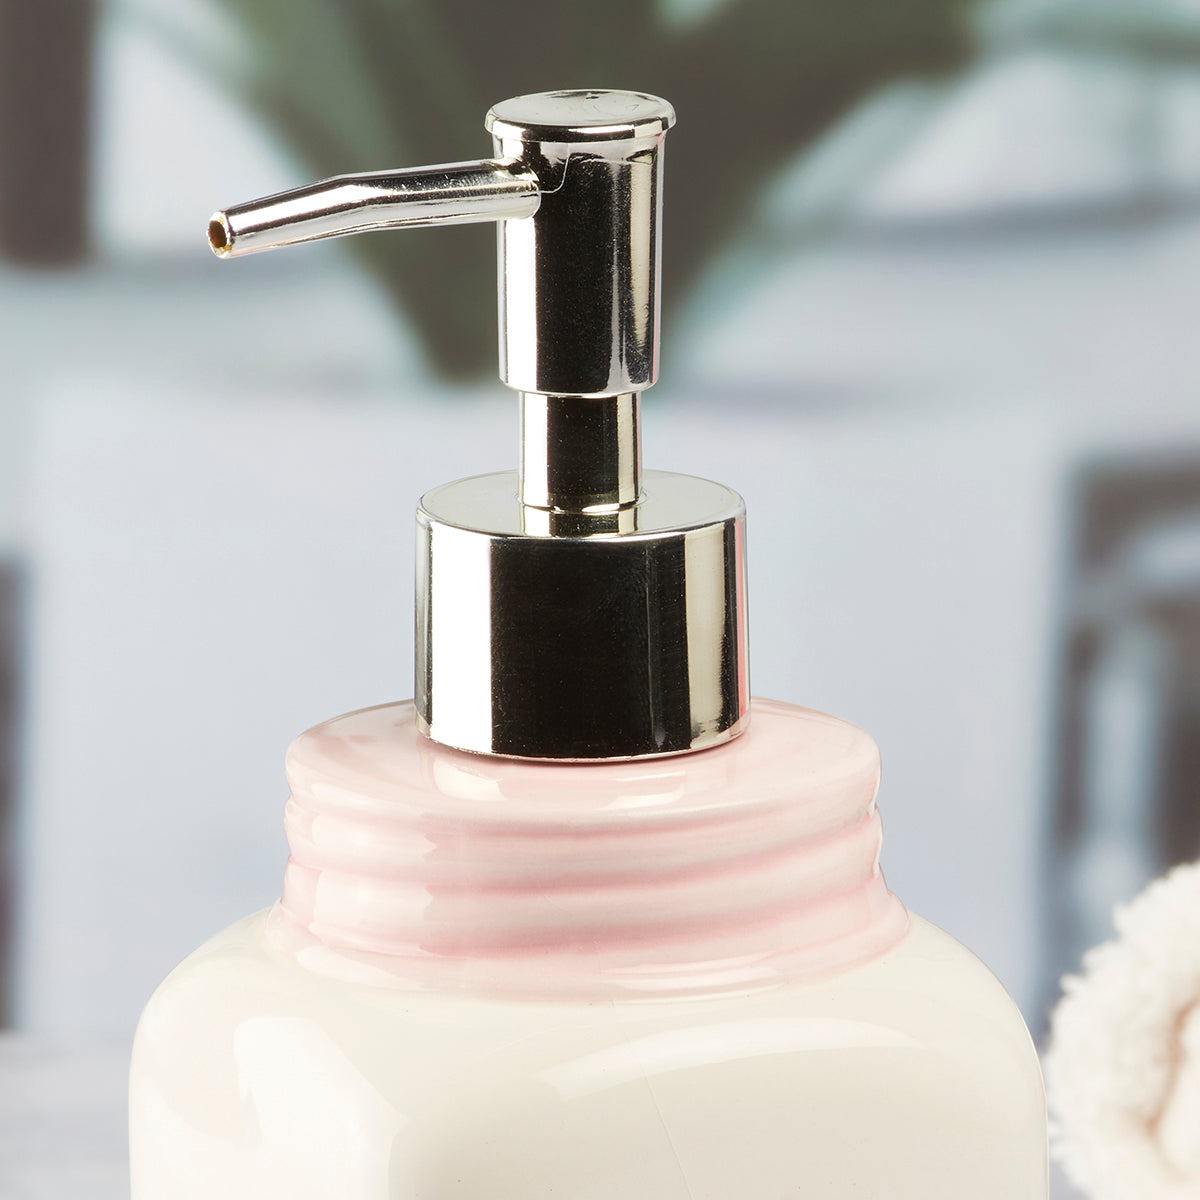 Ceramic Soap Dispenser handwash Pump for Bathroom, Set of 1, White/Pink (9652)